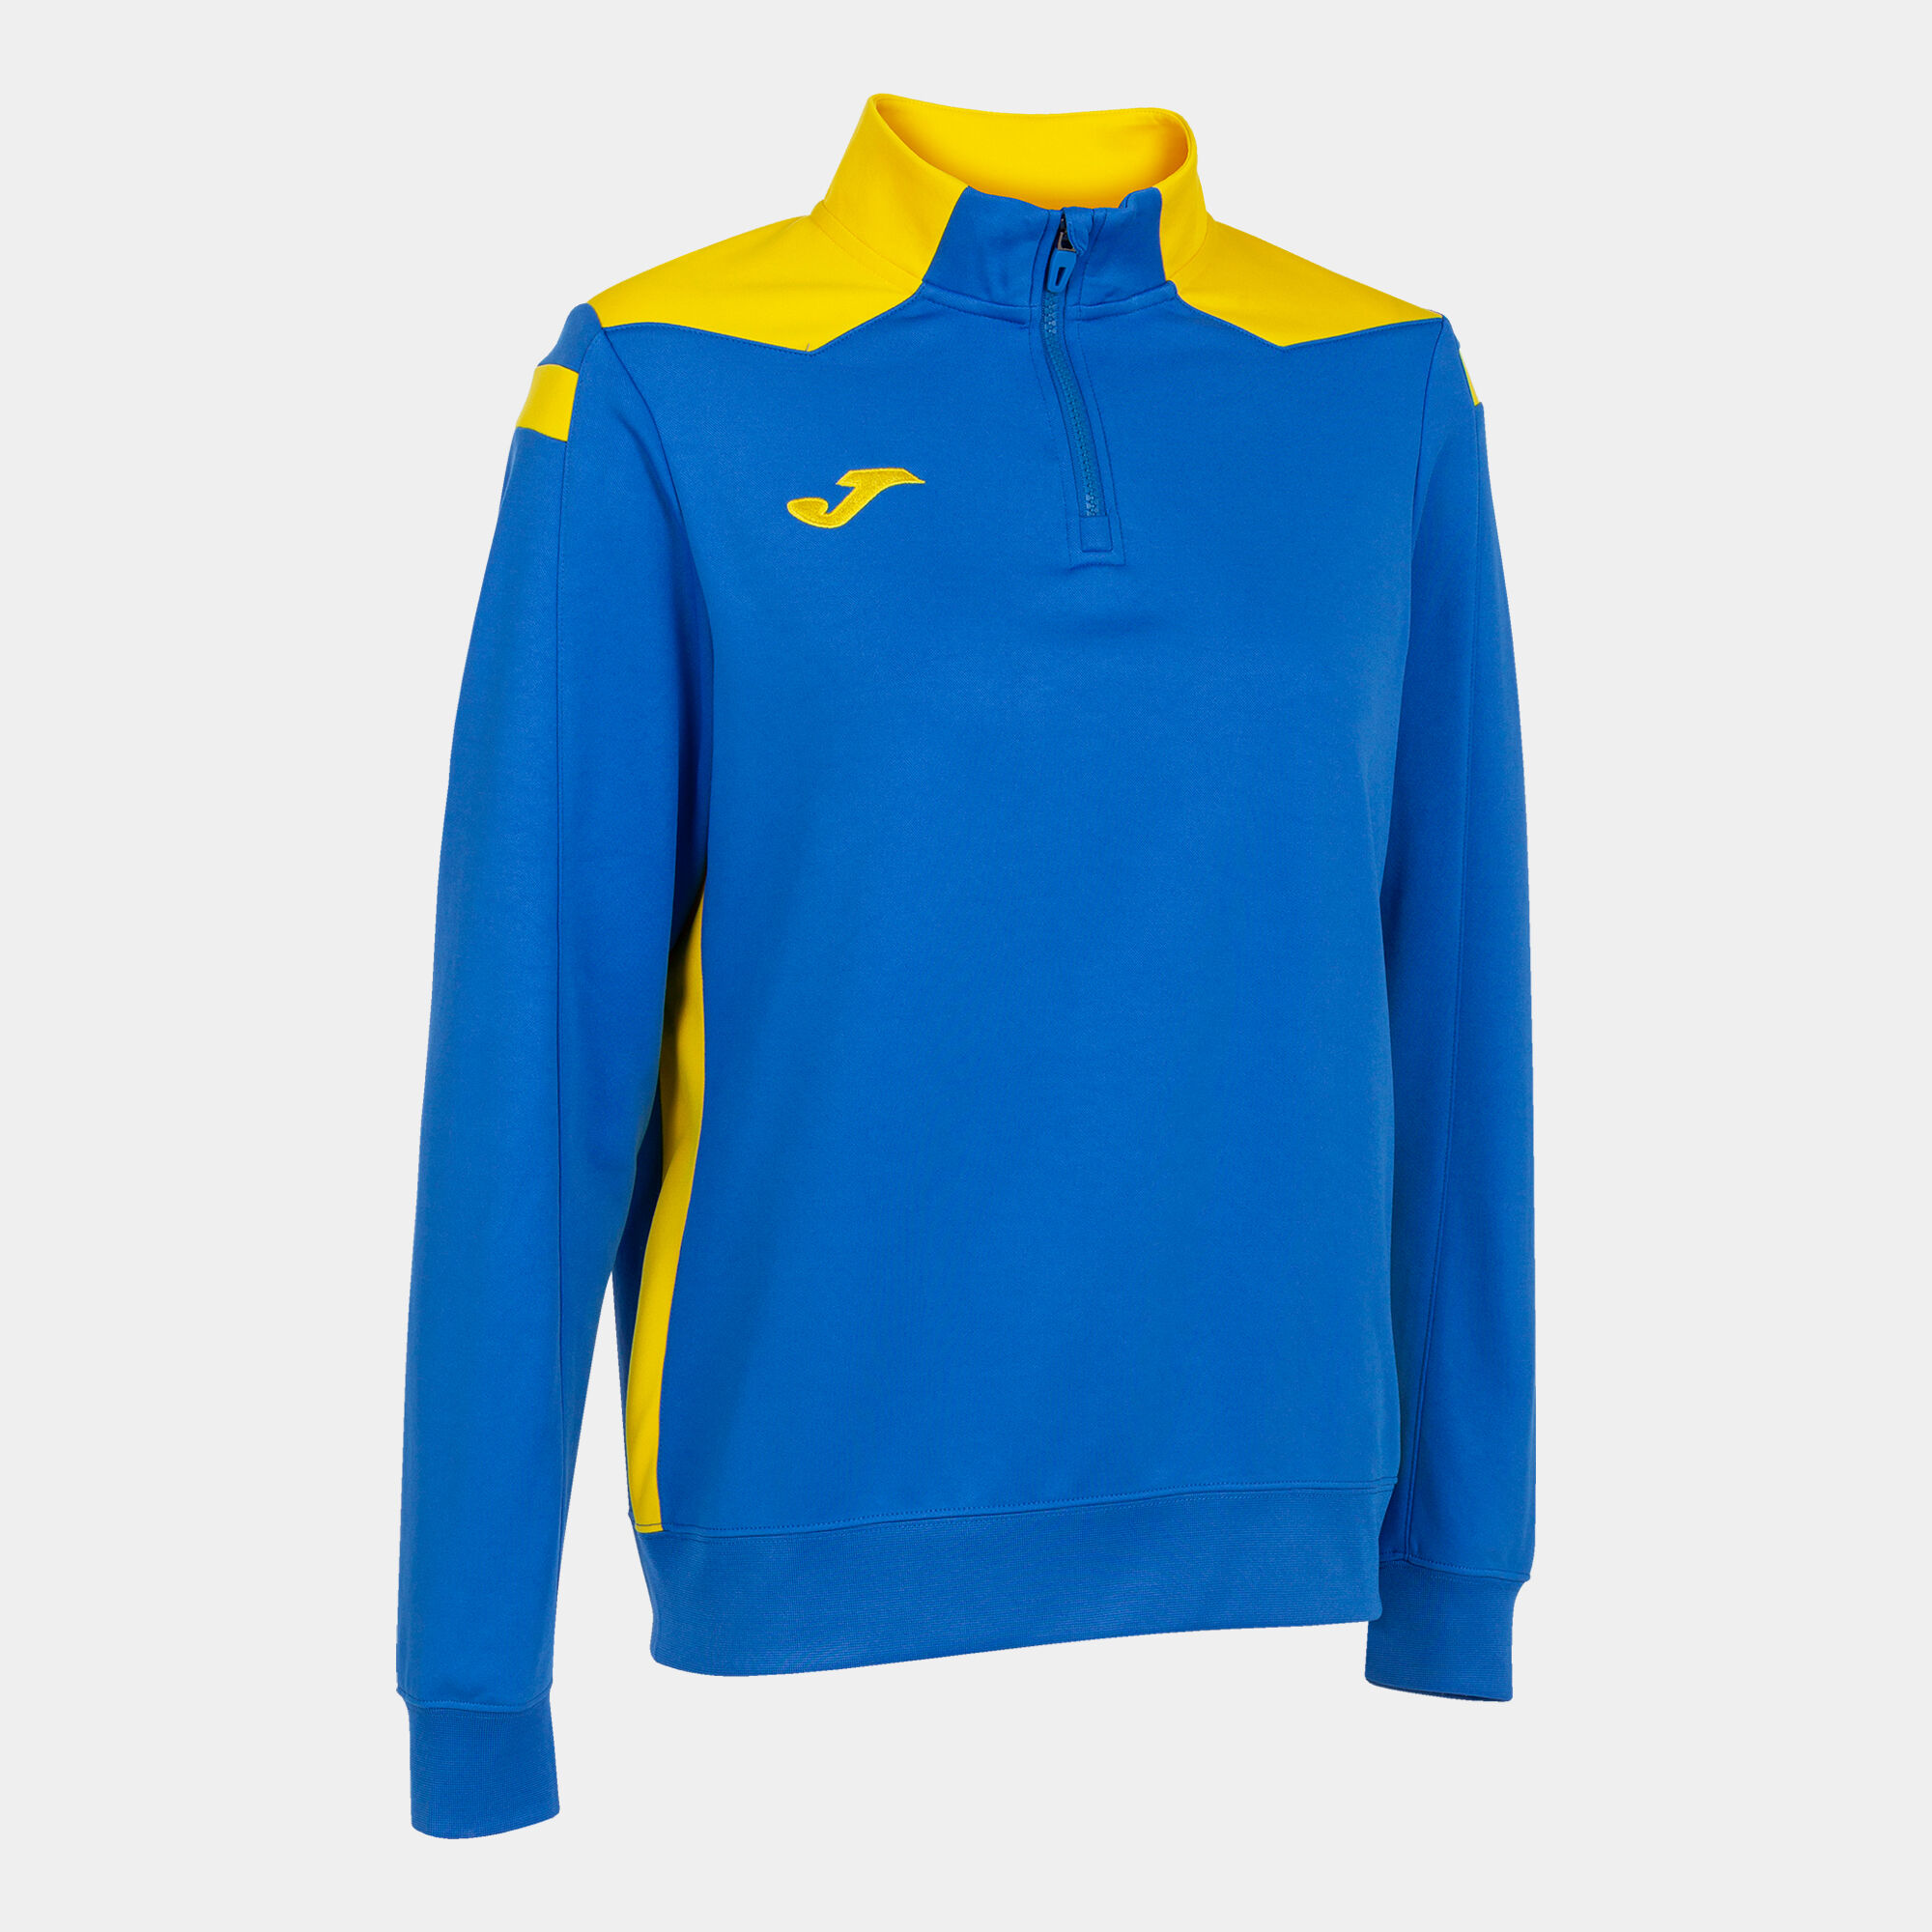 Sweatshirt woman Championship VI royal blue yellow